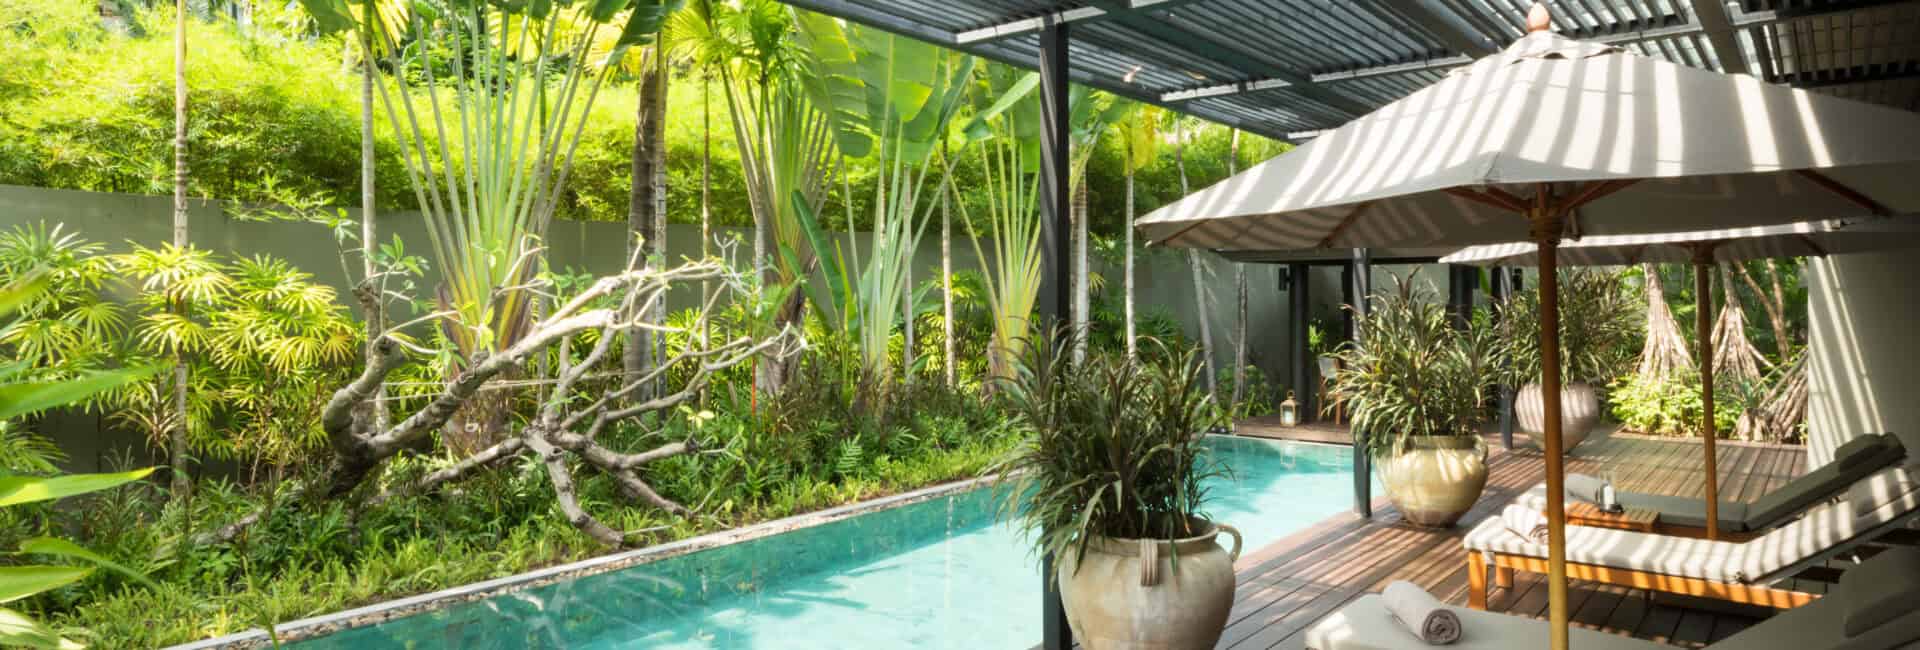 Anantara Layan Phuket Resort - Guest Room Pool